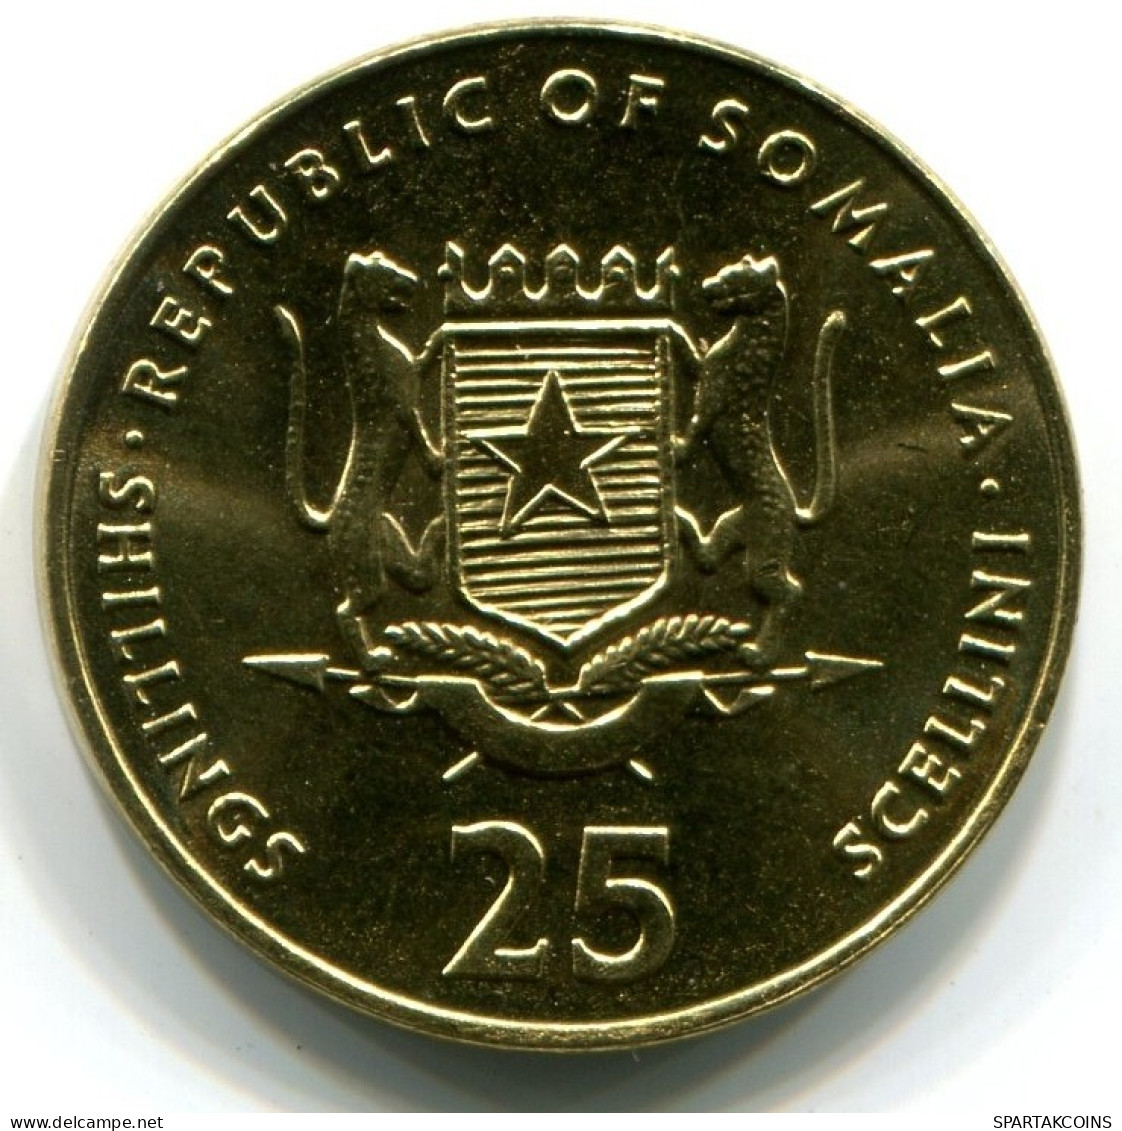 25 SHILLINGS 2001 SOMALIA UNC Soccer Player Coin #W11229.U.A - Somalie